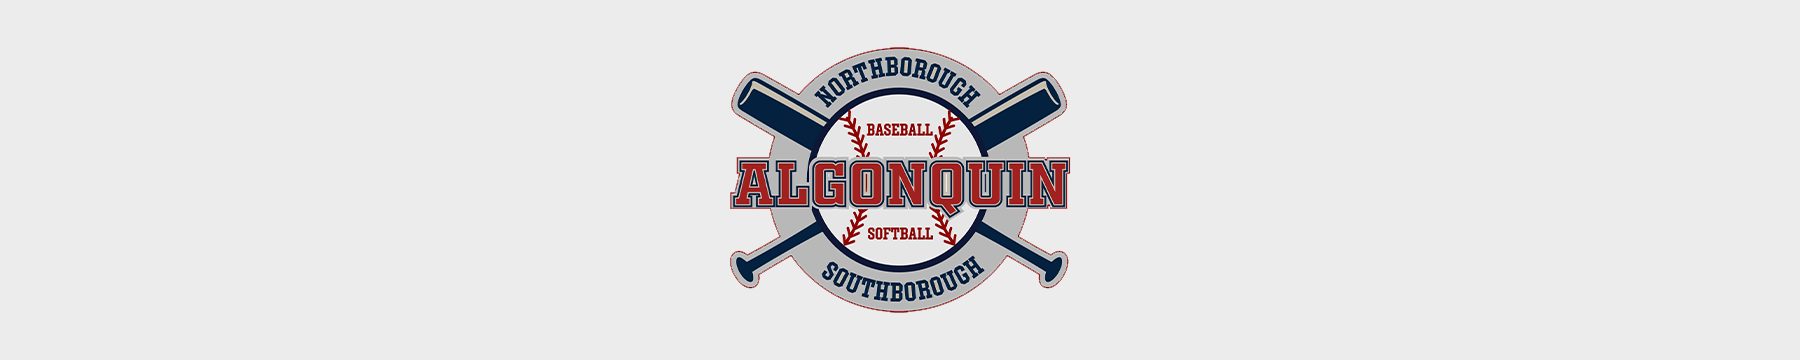 Algonquin Baseball and Softball Association